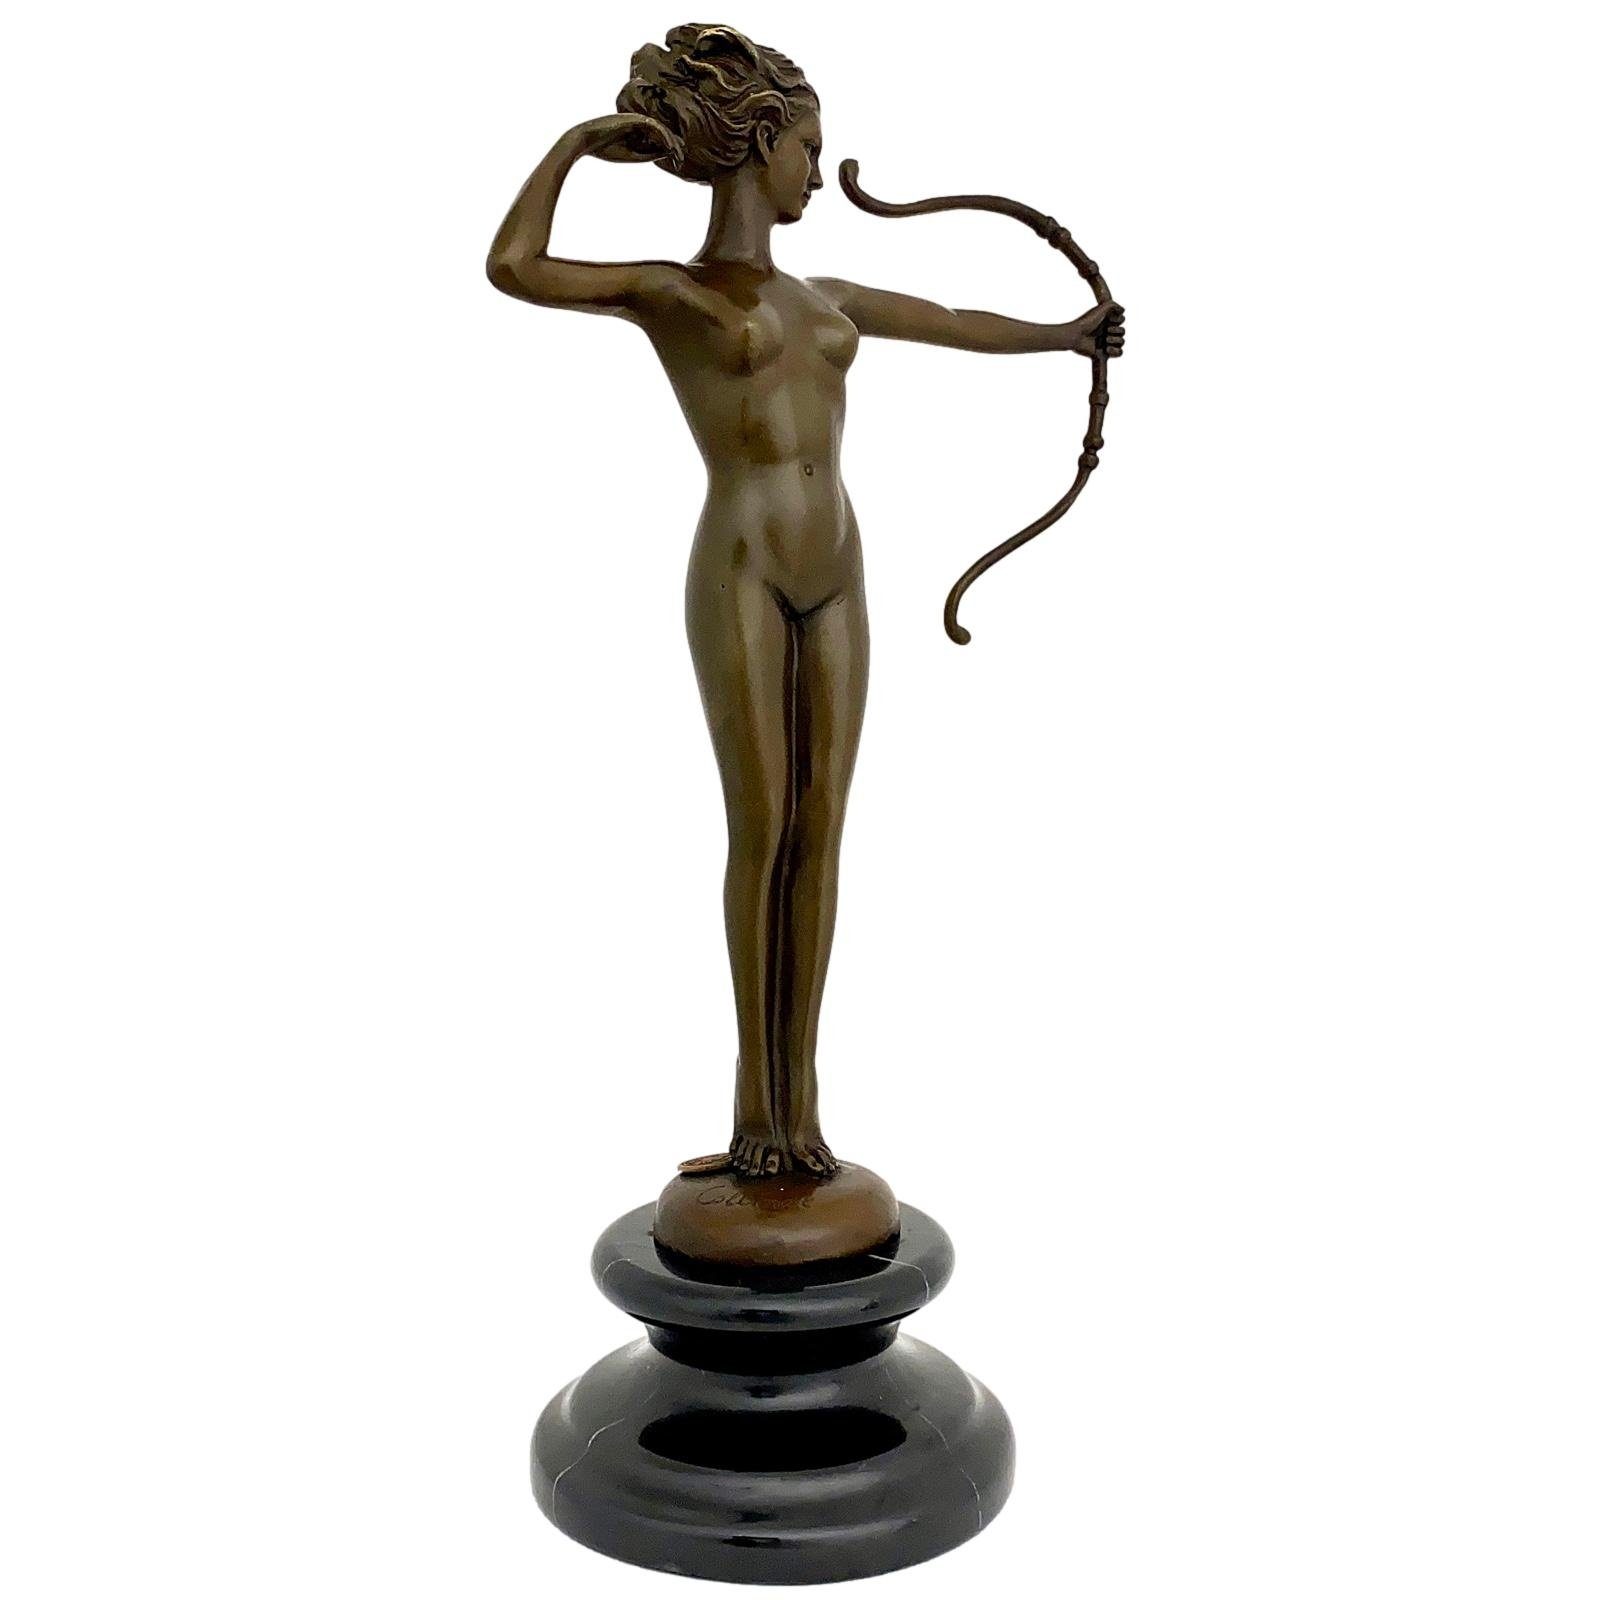 Aubaho Skulptur Bronze Diana Statue Figur Bronzefigur Antik-Stil Bronzeskulptur Bogen